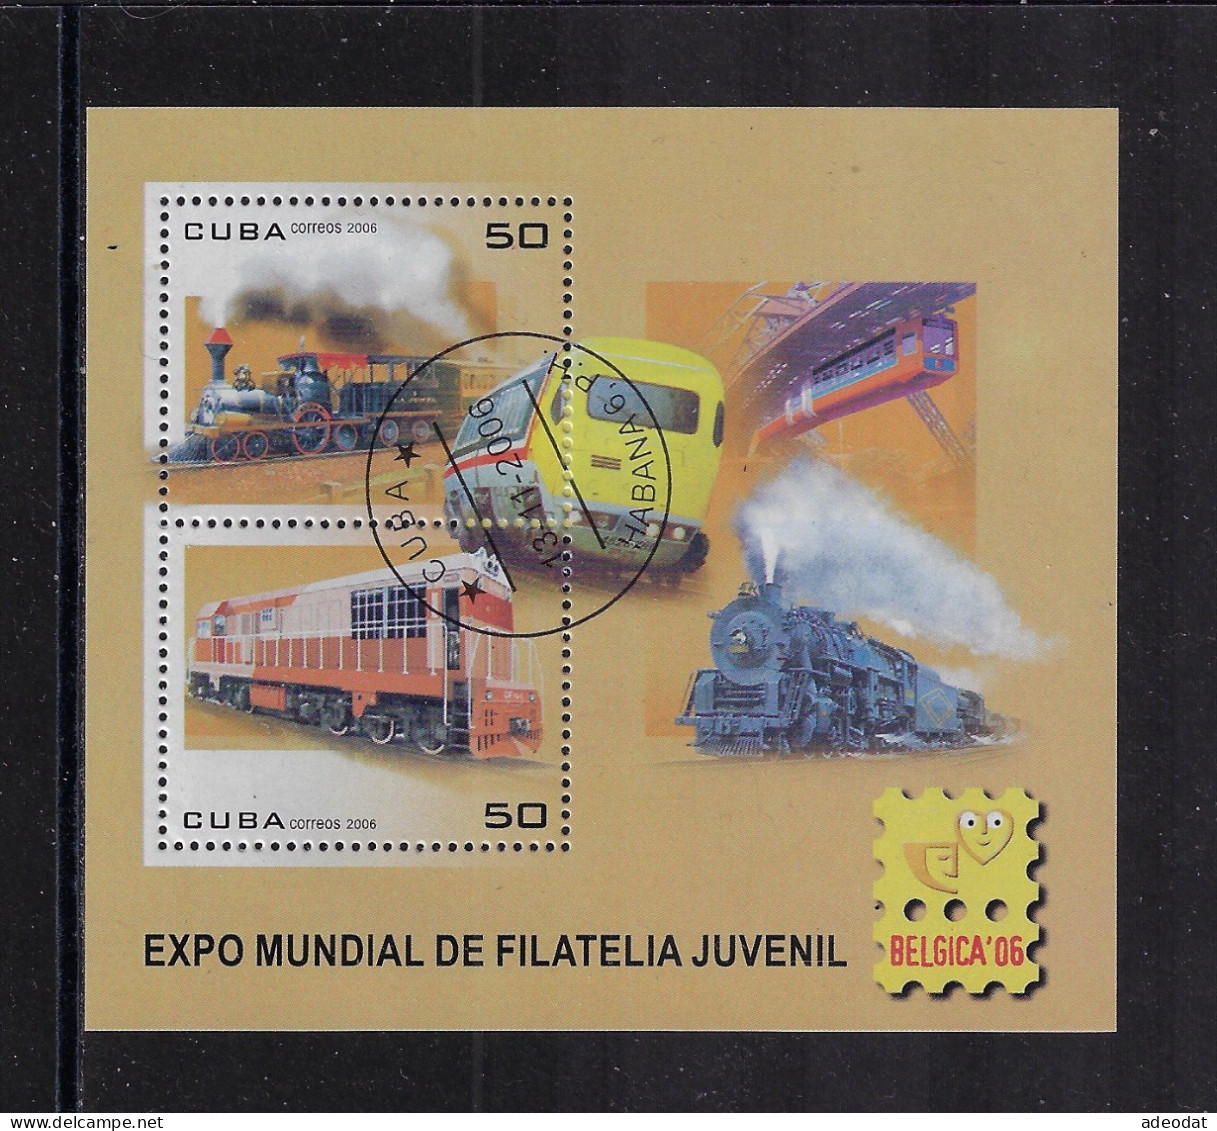 CUBA 2006 SOUVENIR SHEET LOCOMOTIVES SCOTT 4639 CANCELLED - Used Stamps